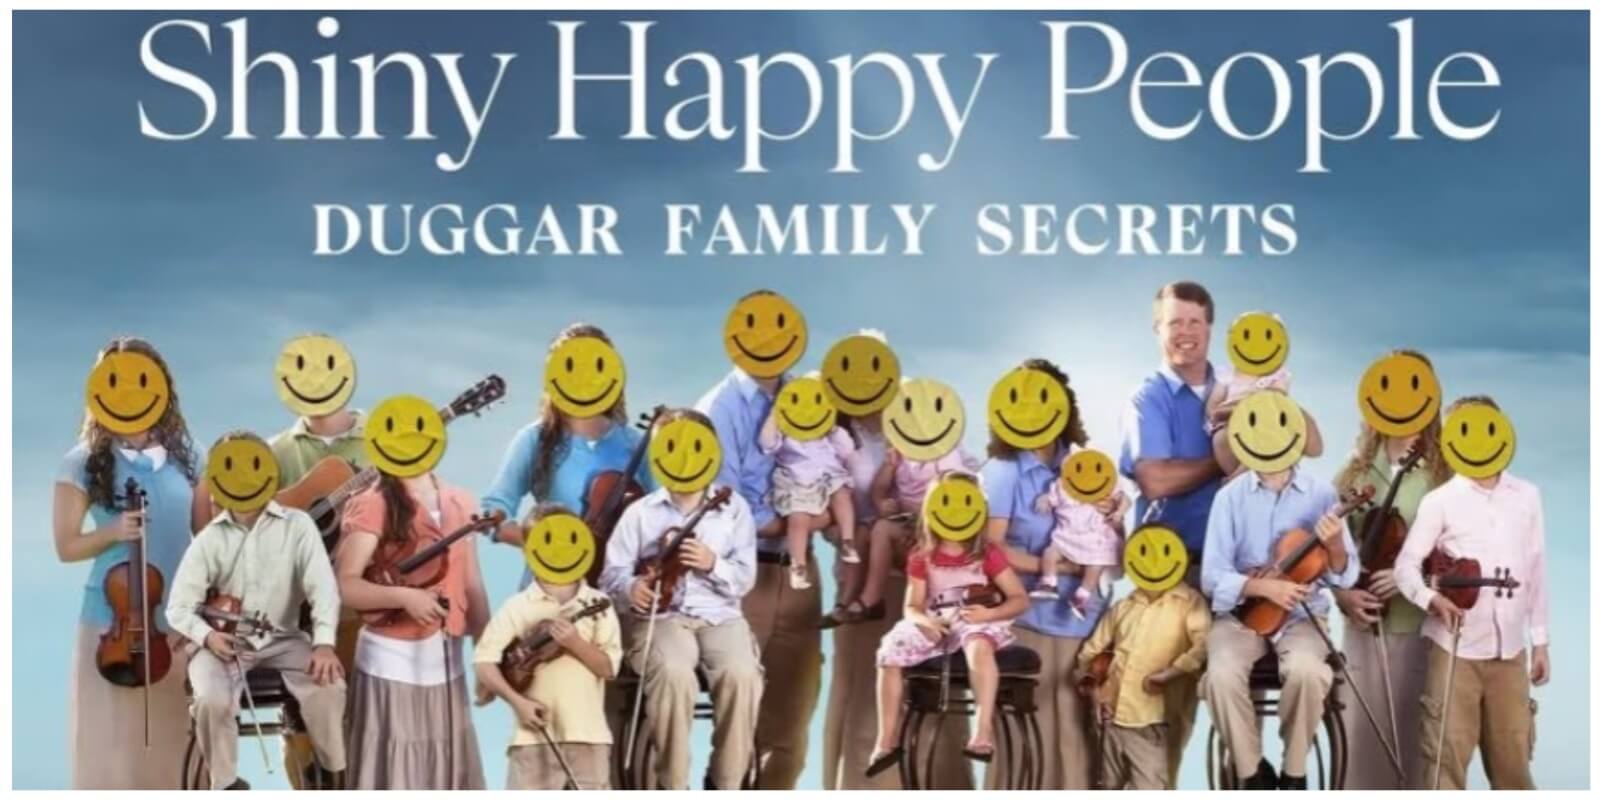 Jim Holt opowiada ten sam żart co Josh Duggar w filmie „Shiny Happy People: Duggar Family Secrets”